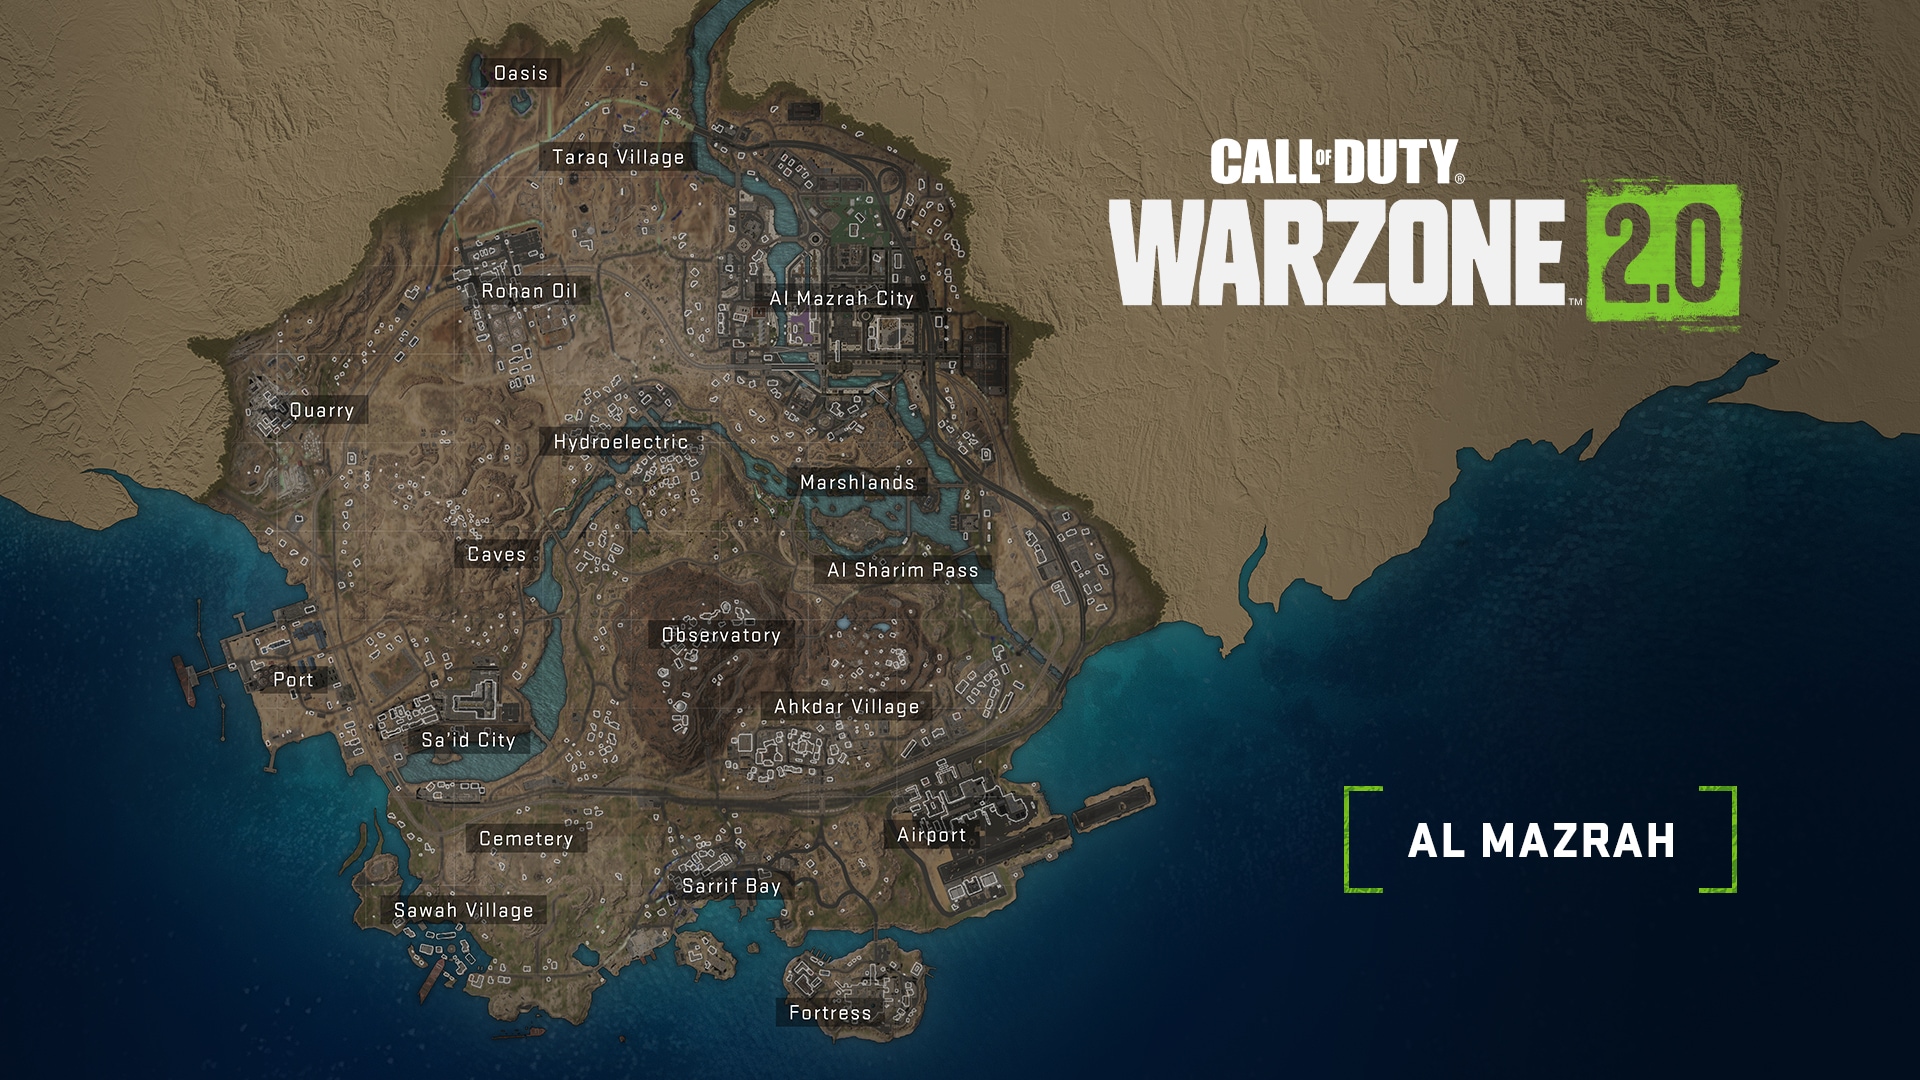 Call of Duty: Warzone 2.0 – Introducing Al Mazrah